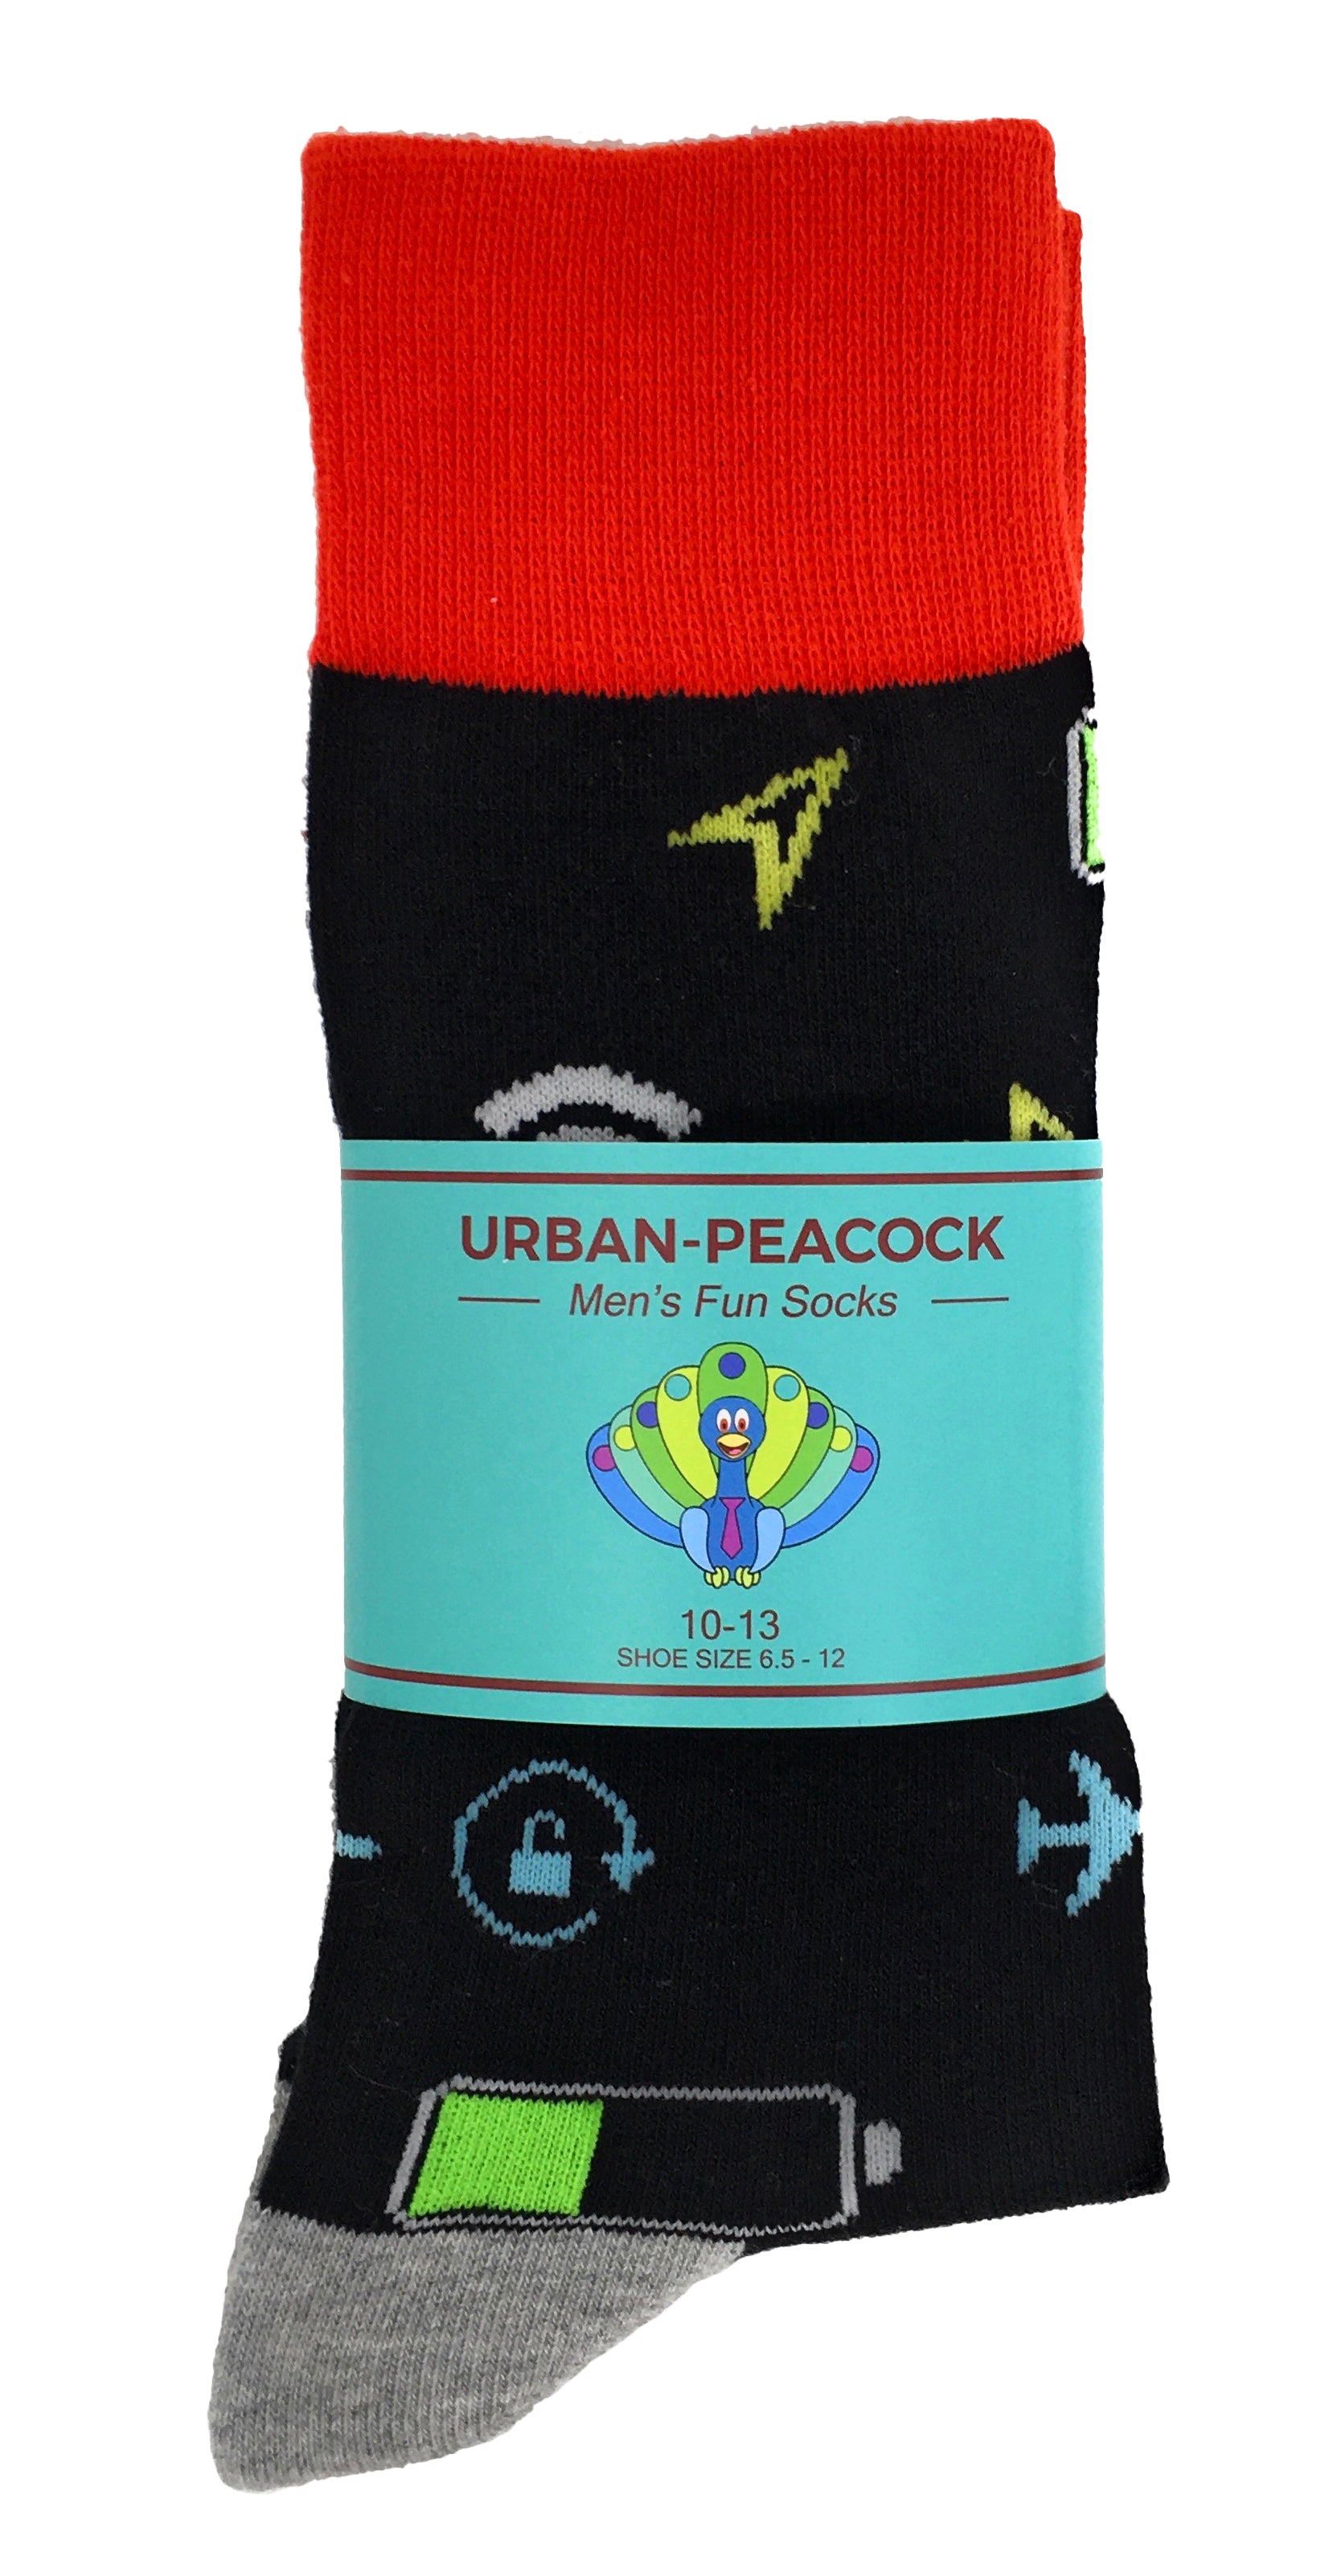 Urban-Peacock Men's Novelty Crew Socks - Smartphone - Black